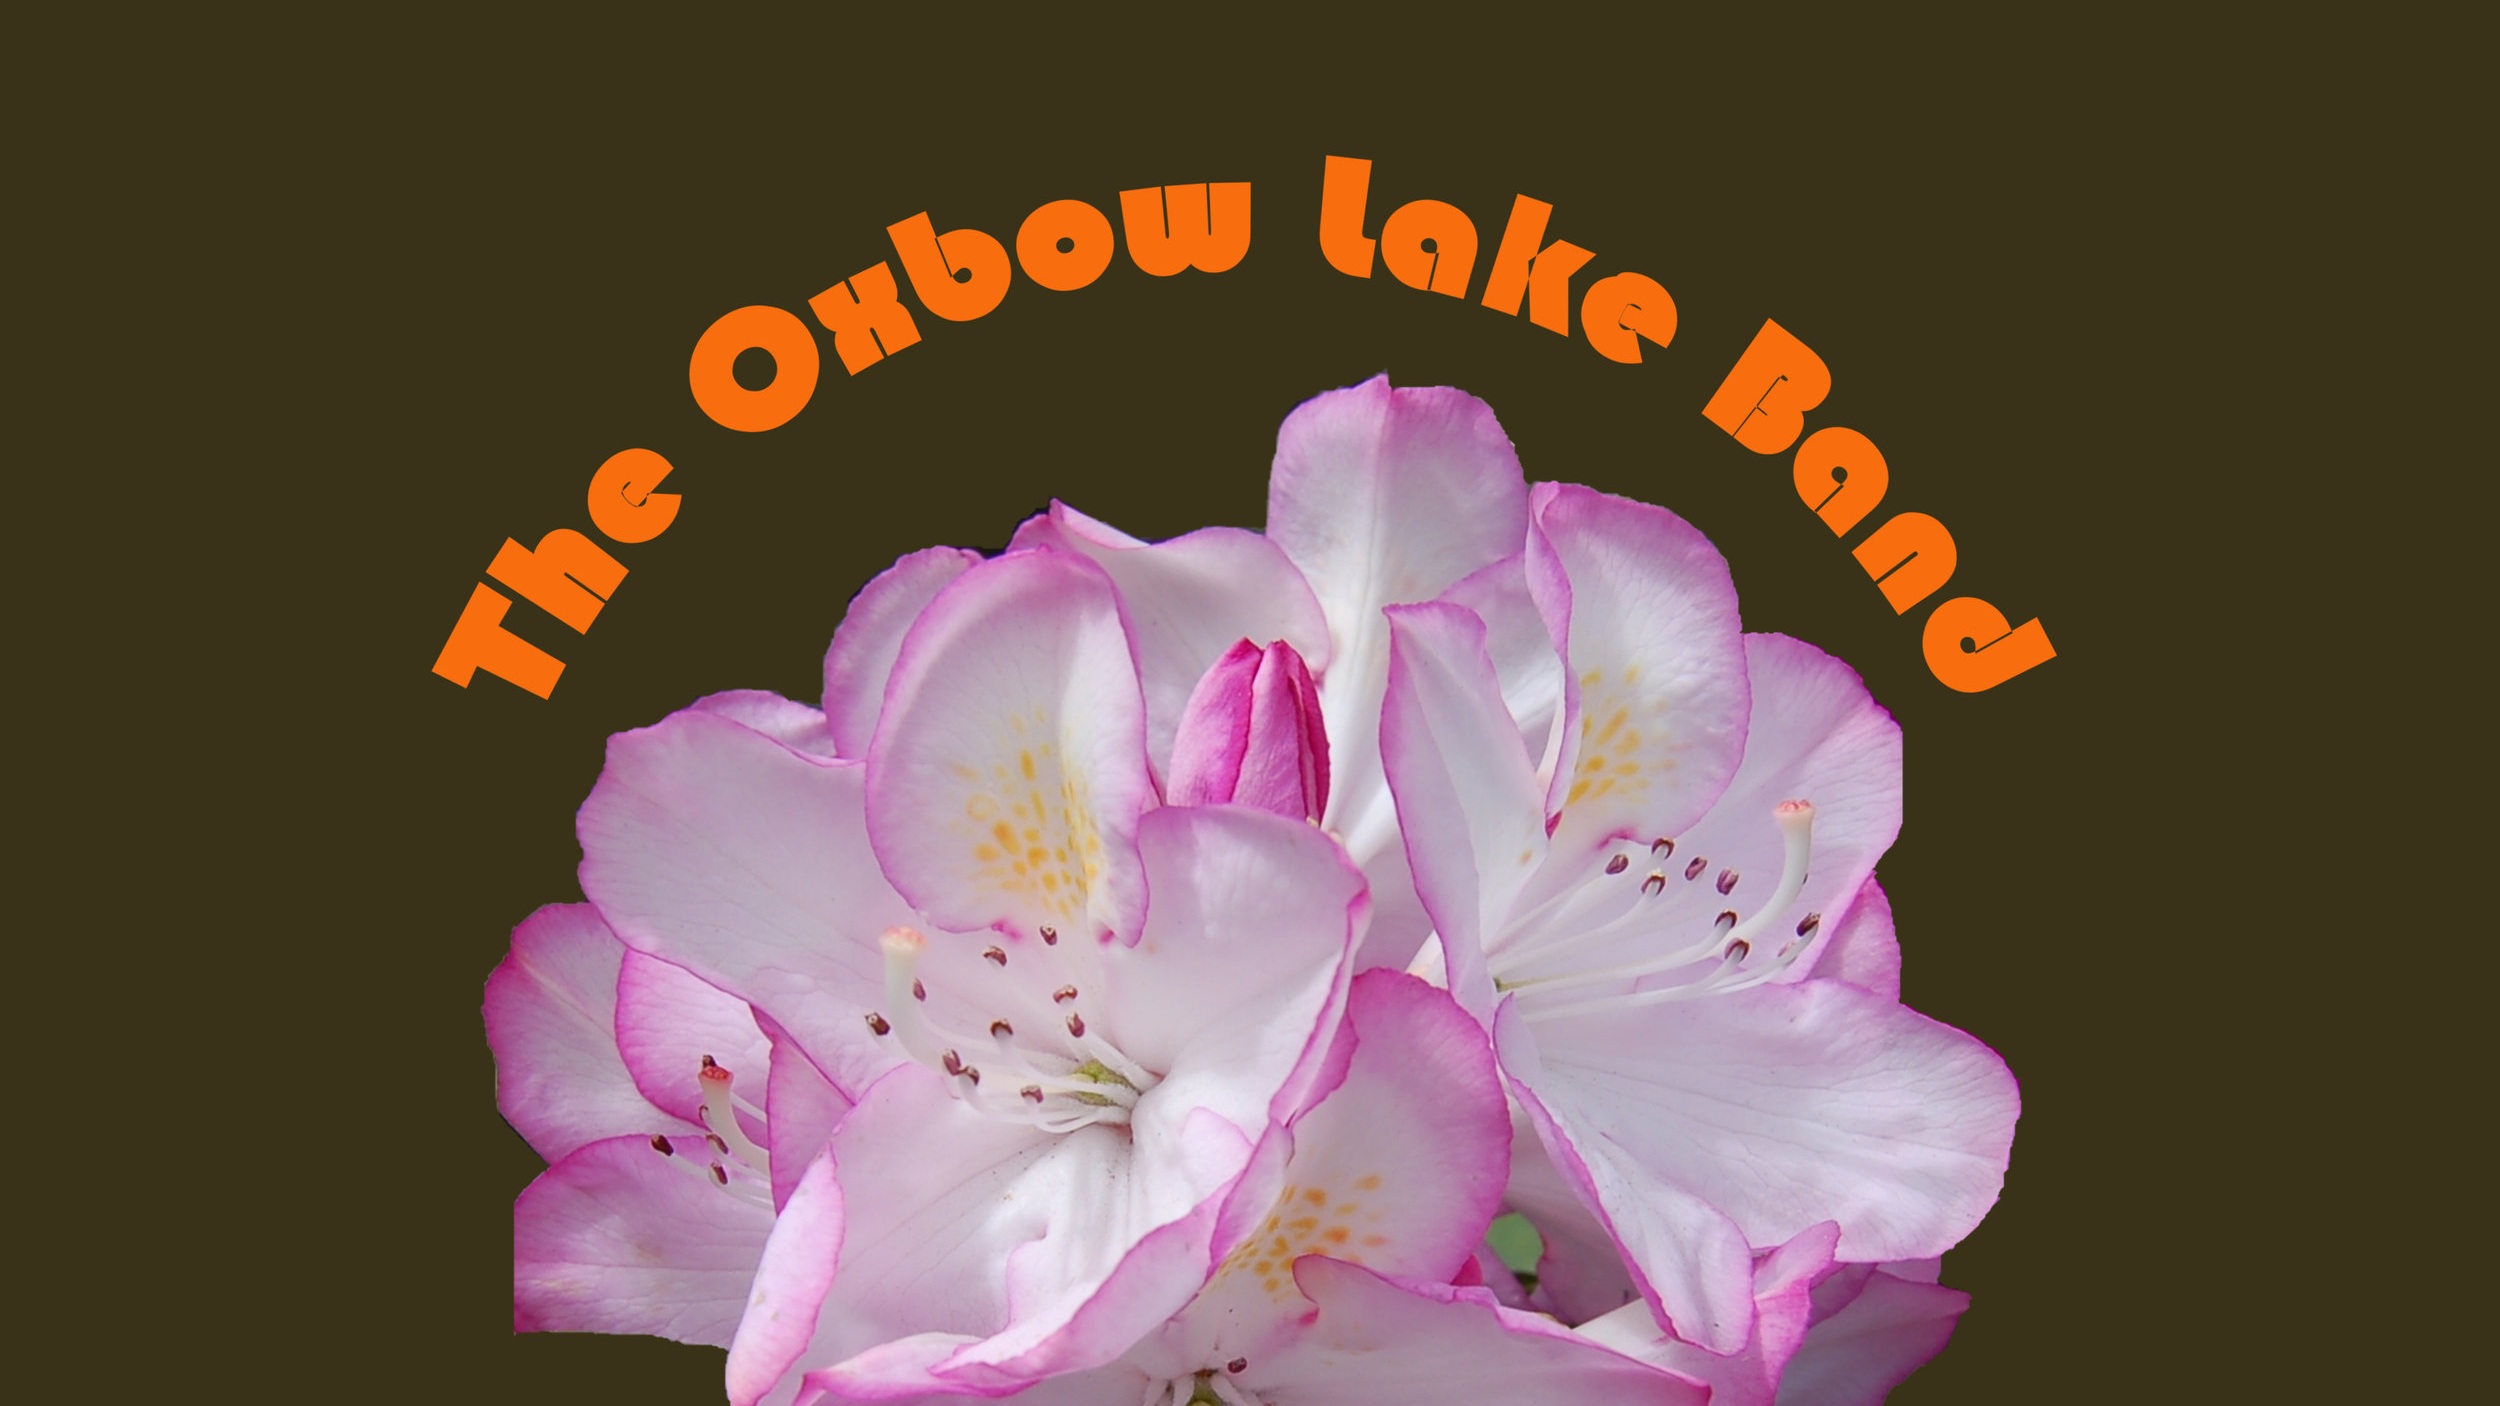 oxbow lake band tour